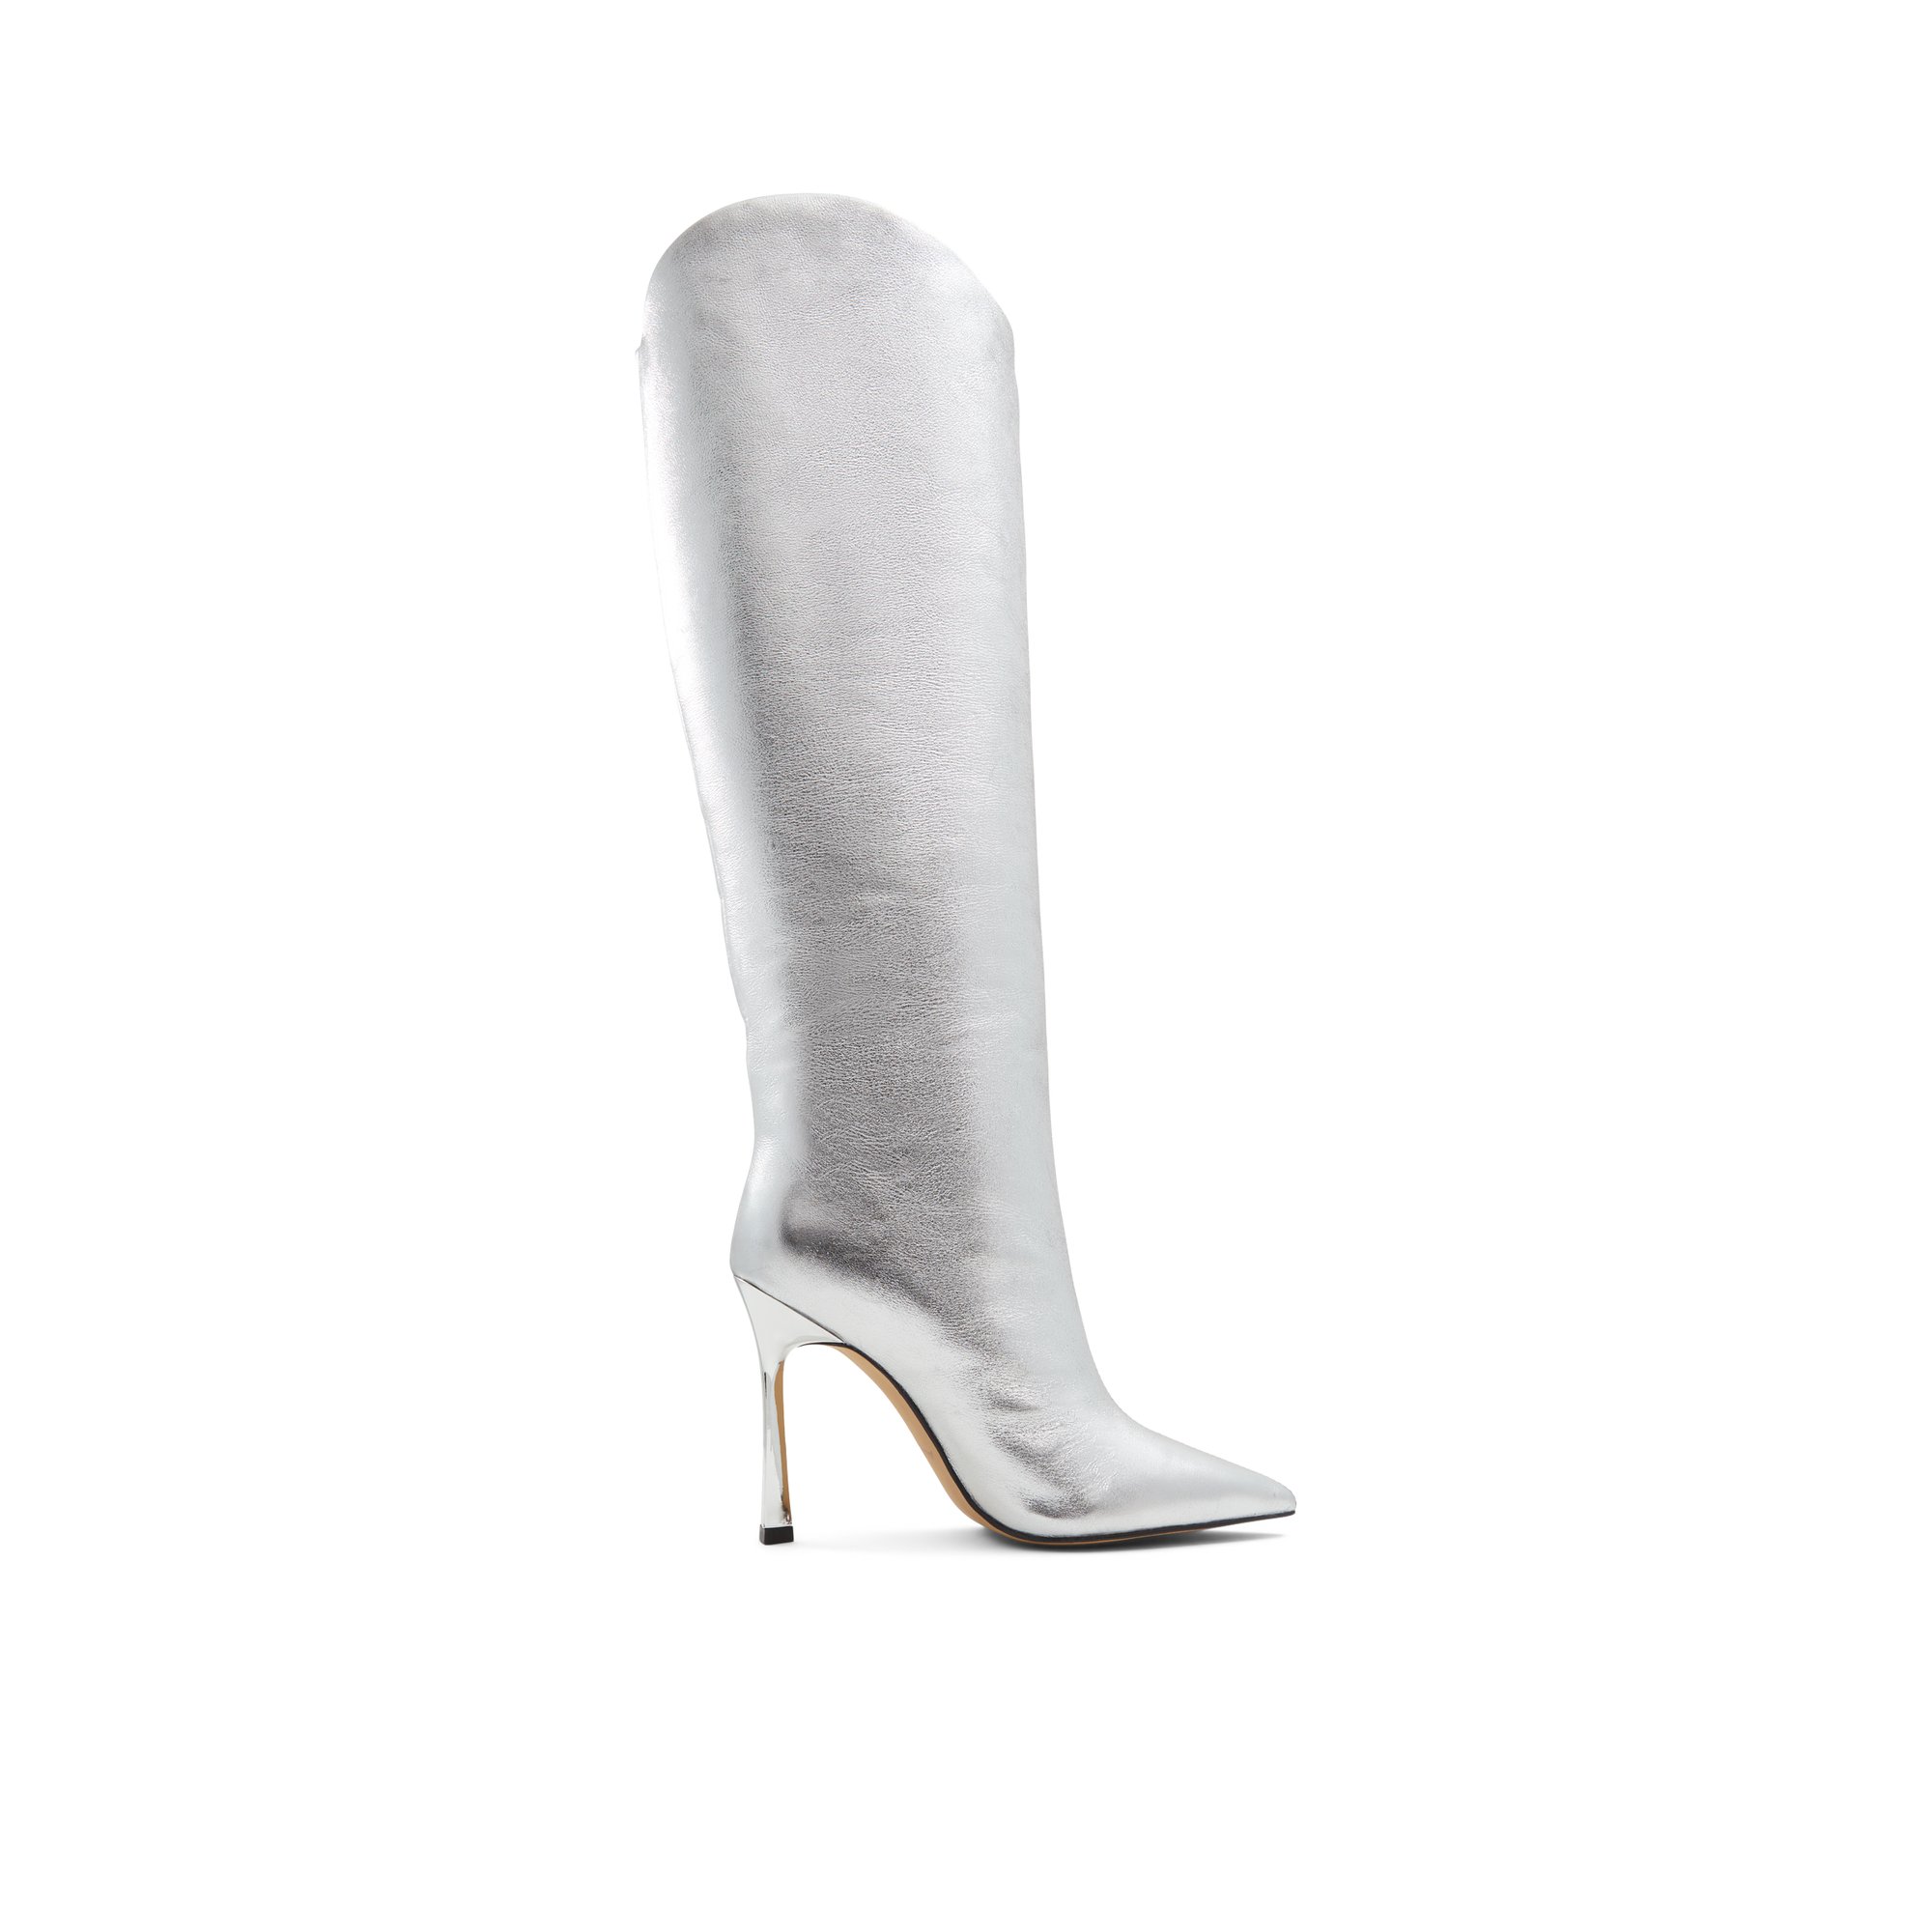 ALDO Devondra - Women's Dress Boot - Silver